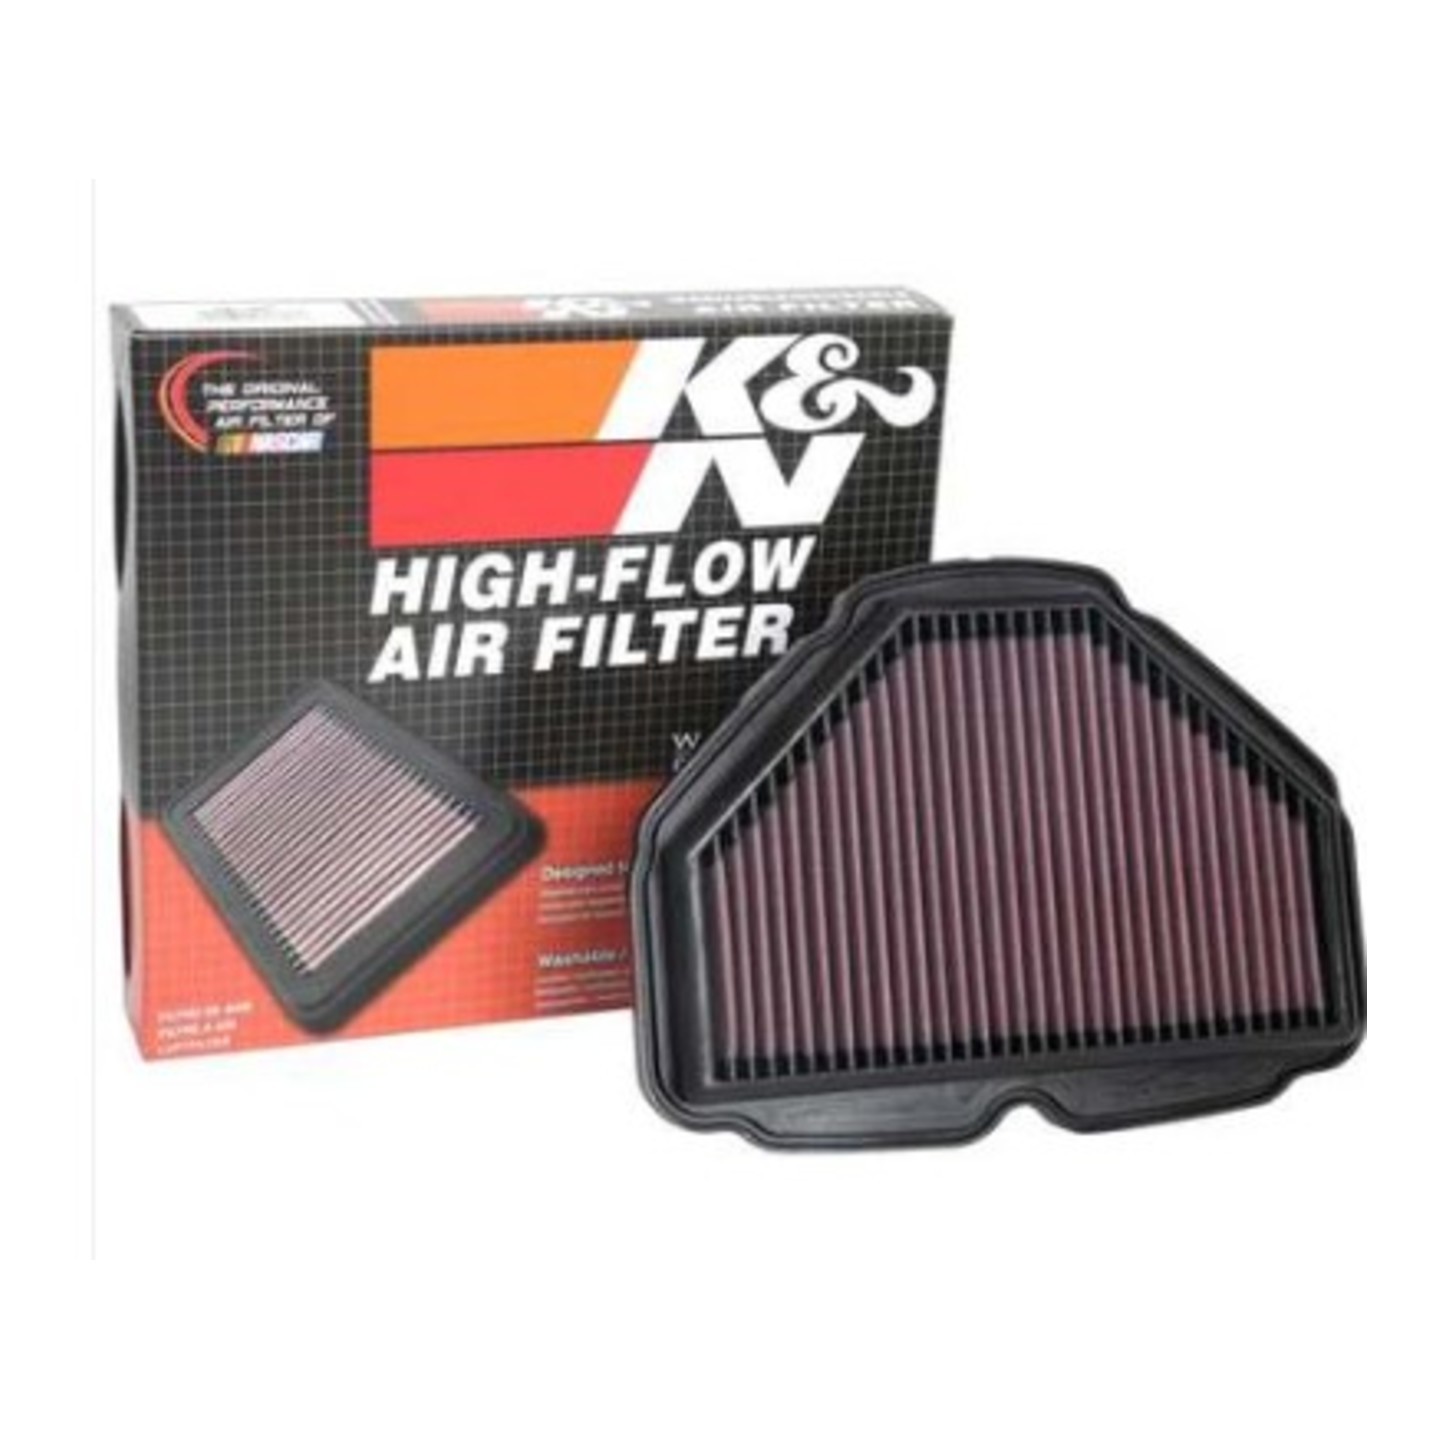 Honda Goldwing GL1800 HA-1818 reusable high flow air filter